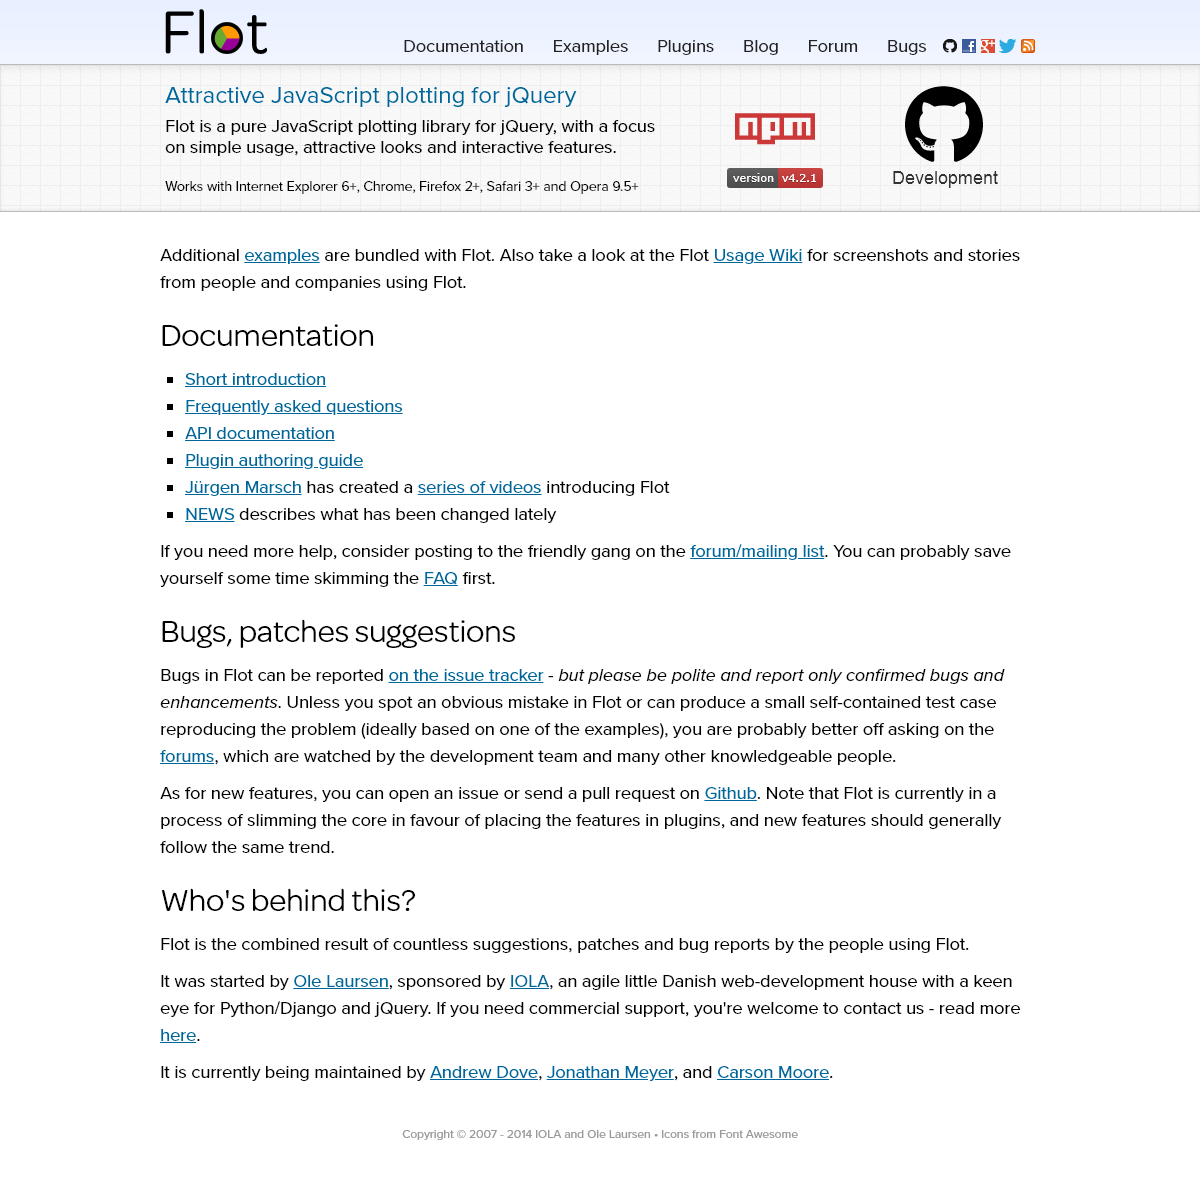 A complete backup of flotcharts.org